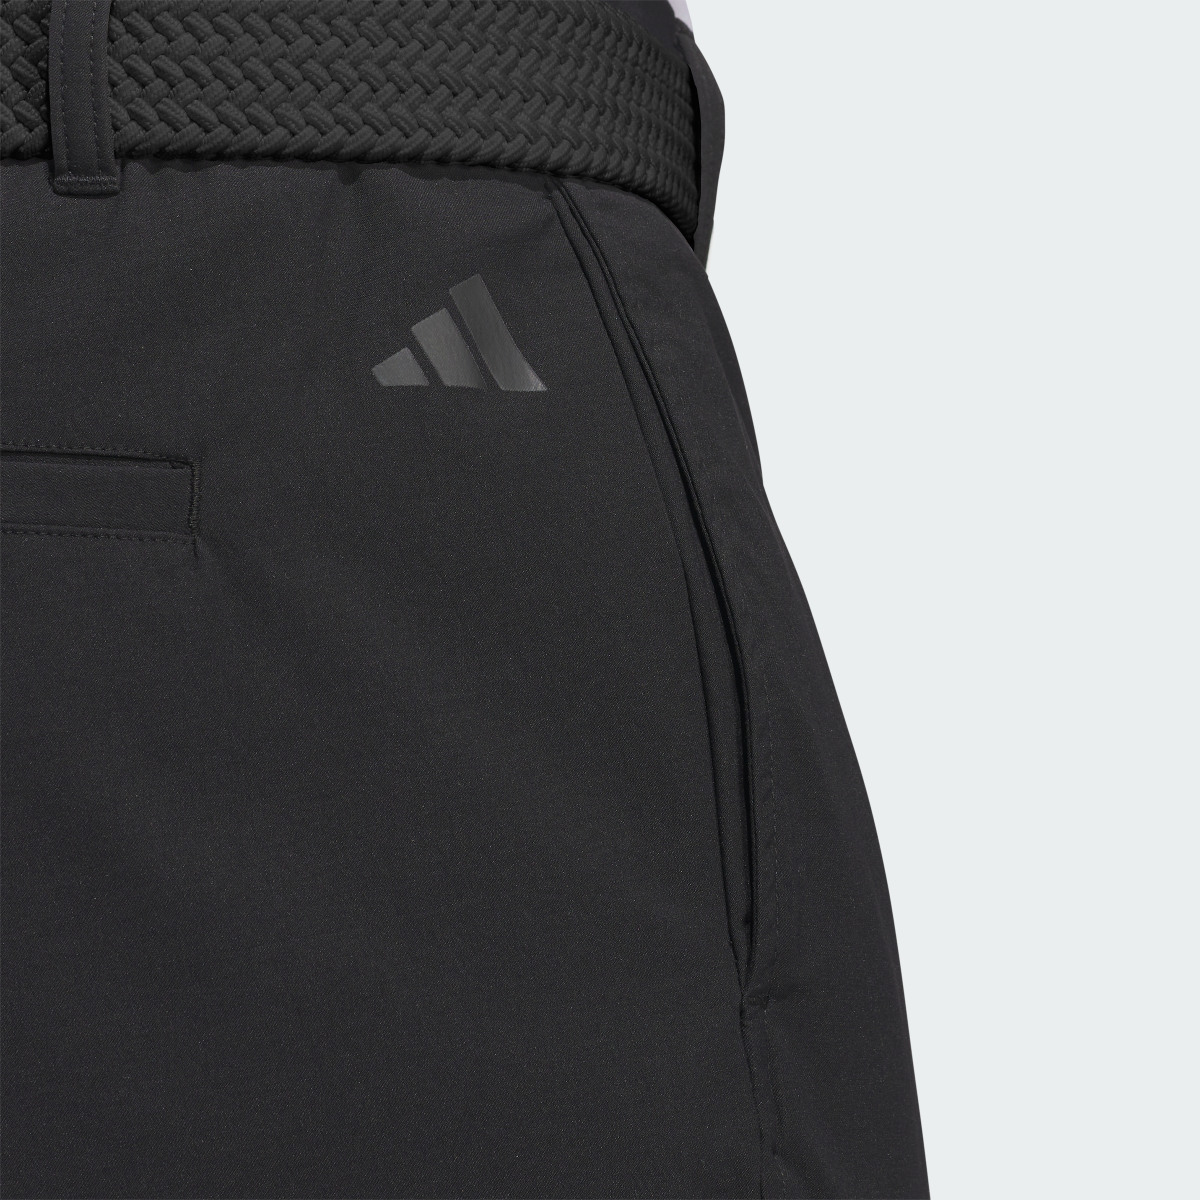 Adidas Ultimate365 Chino Pants. 5